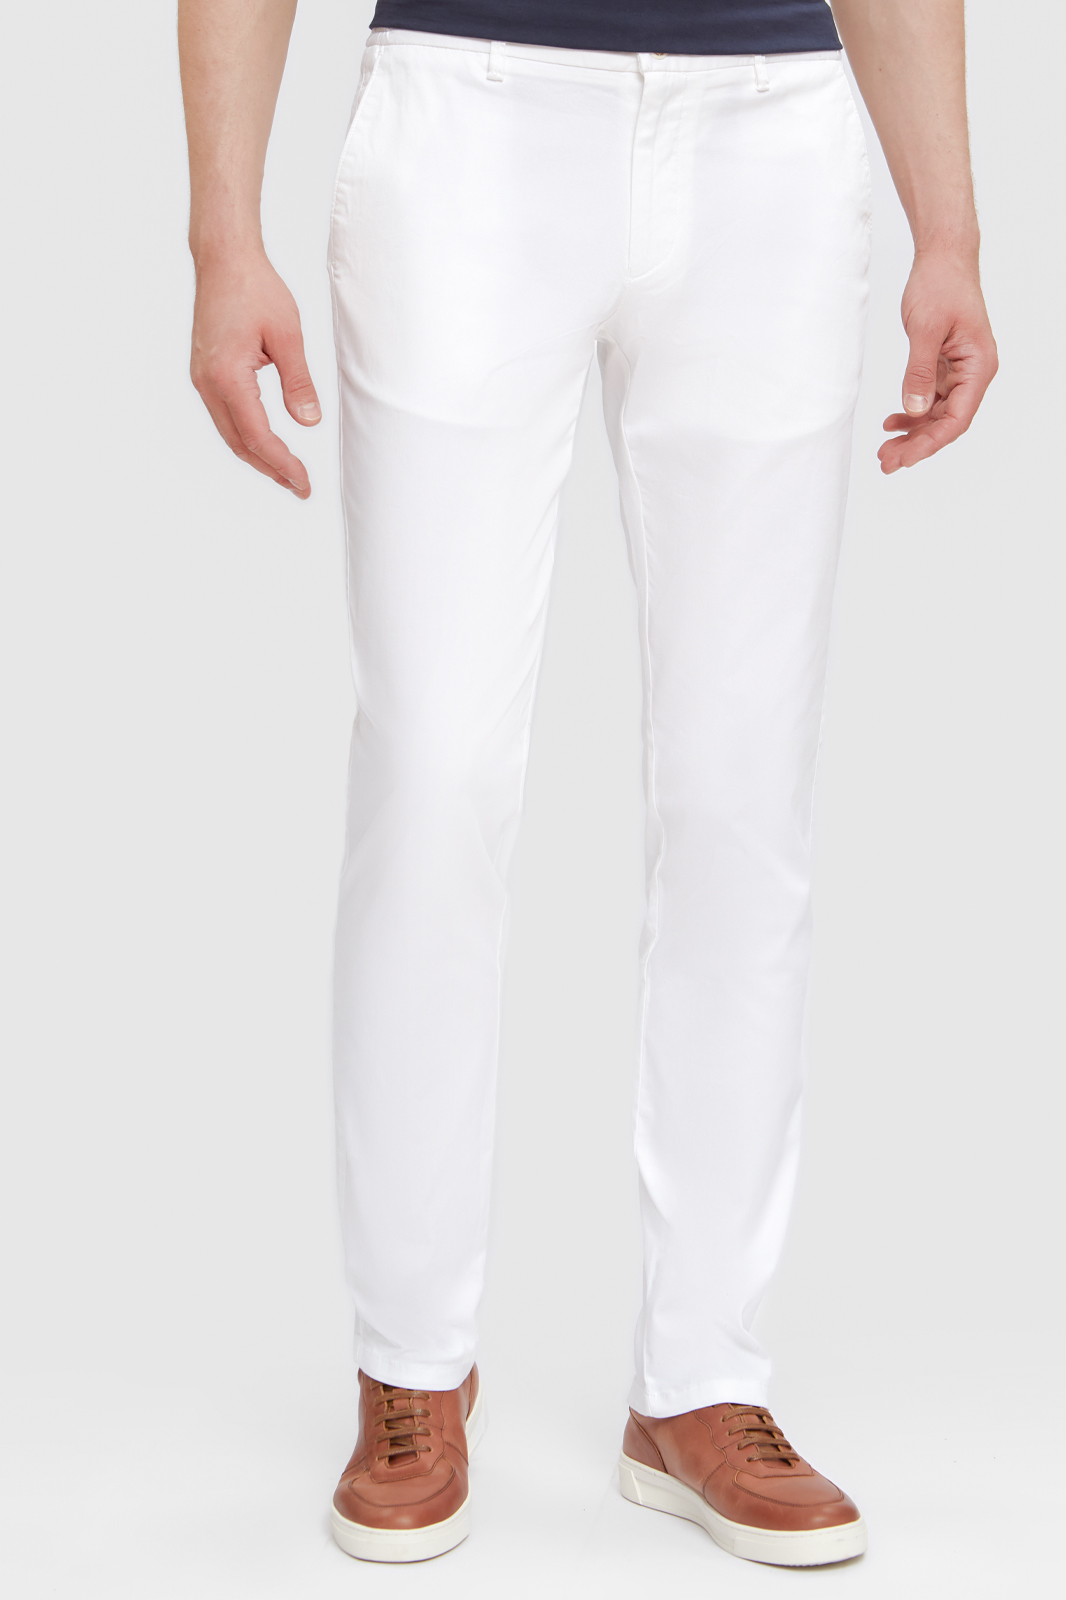 kanzler брюки урбан фит белые из хлопка